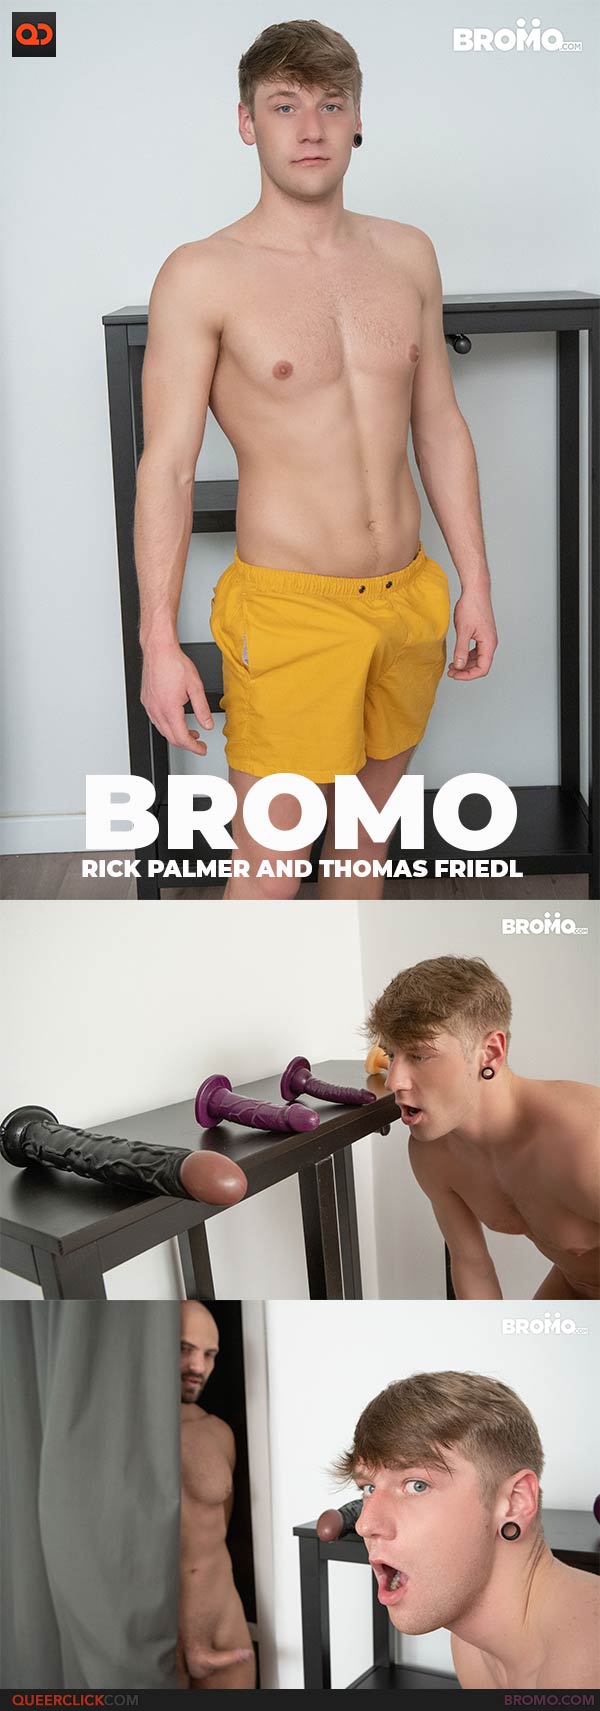 Bromo: Rick Palmer and Thomas Friedl